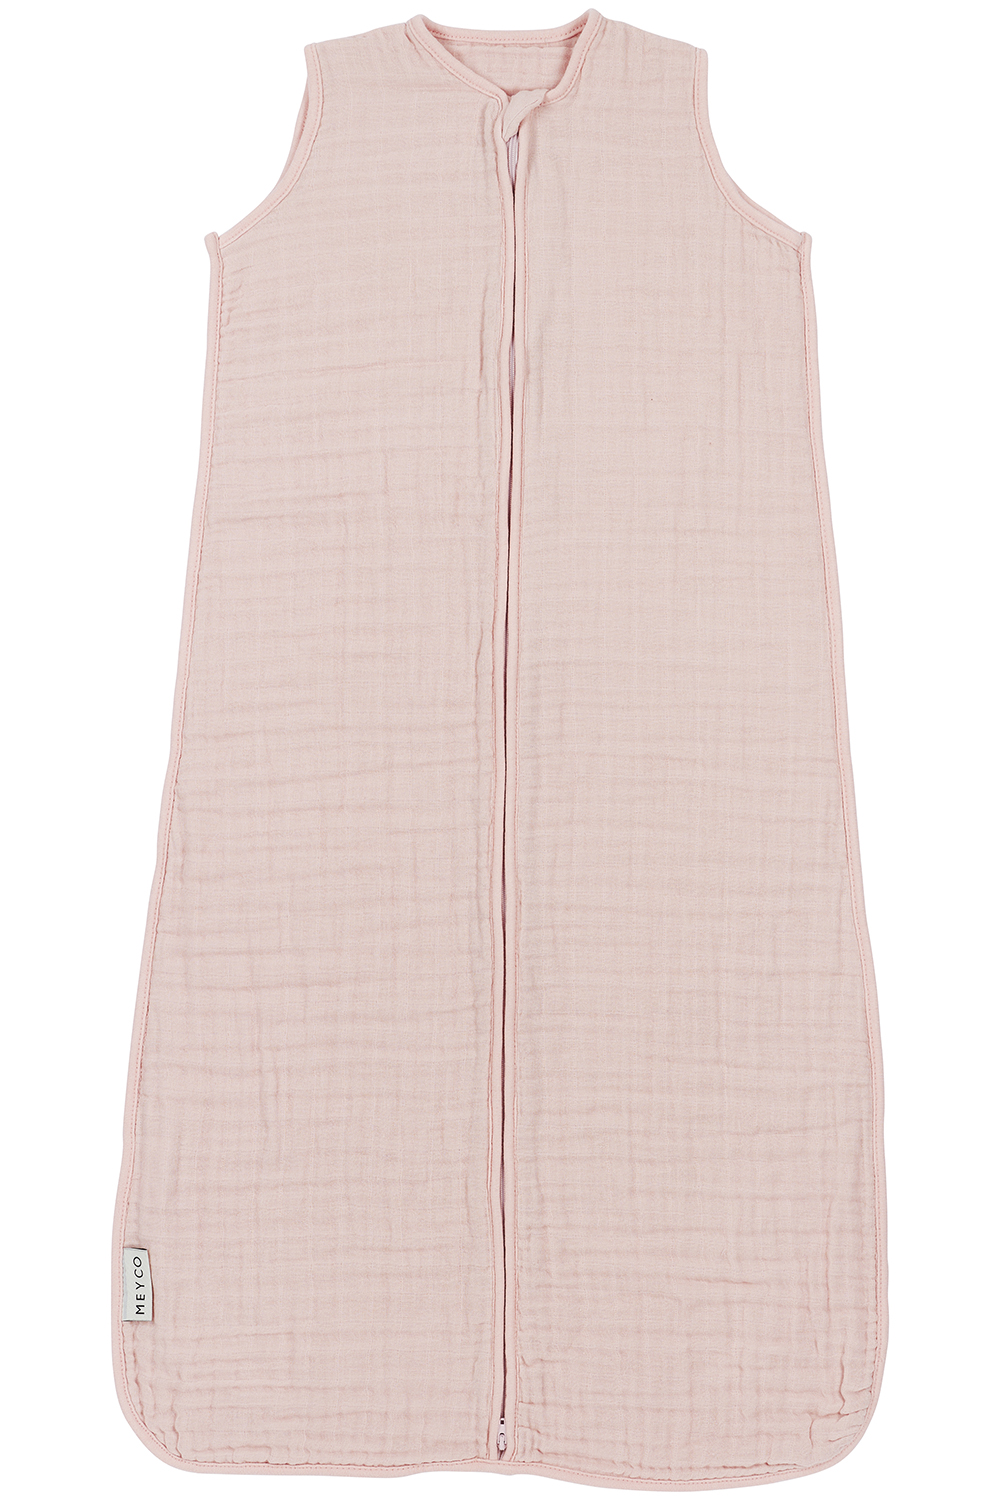 Sleepingbag muslin Uni - soft pink - 70cm